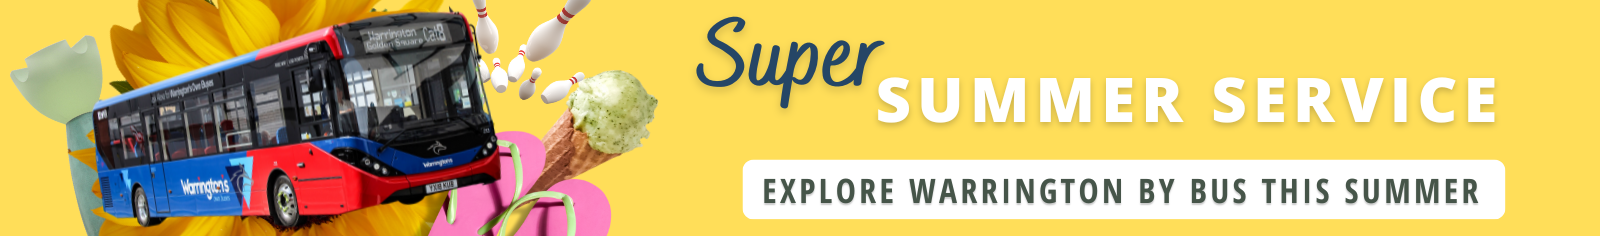 Super Summer Service - explore Warrington by bus